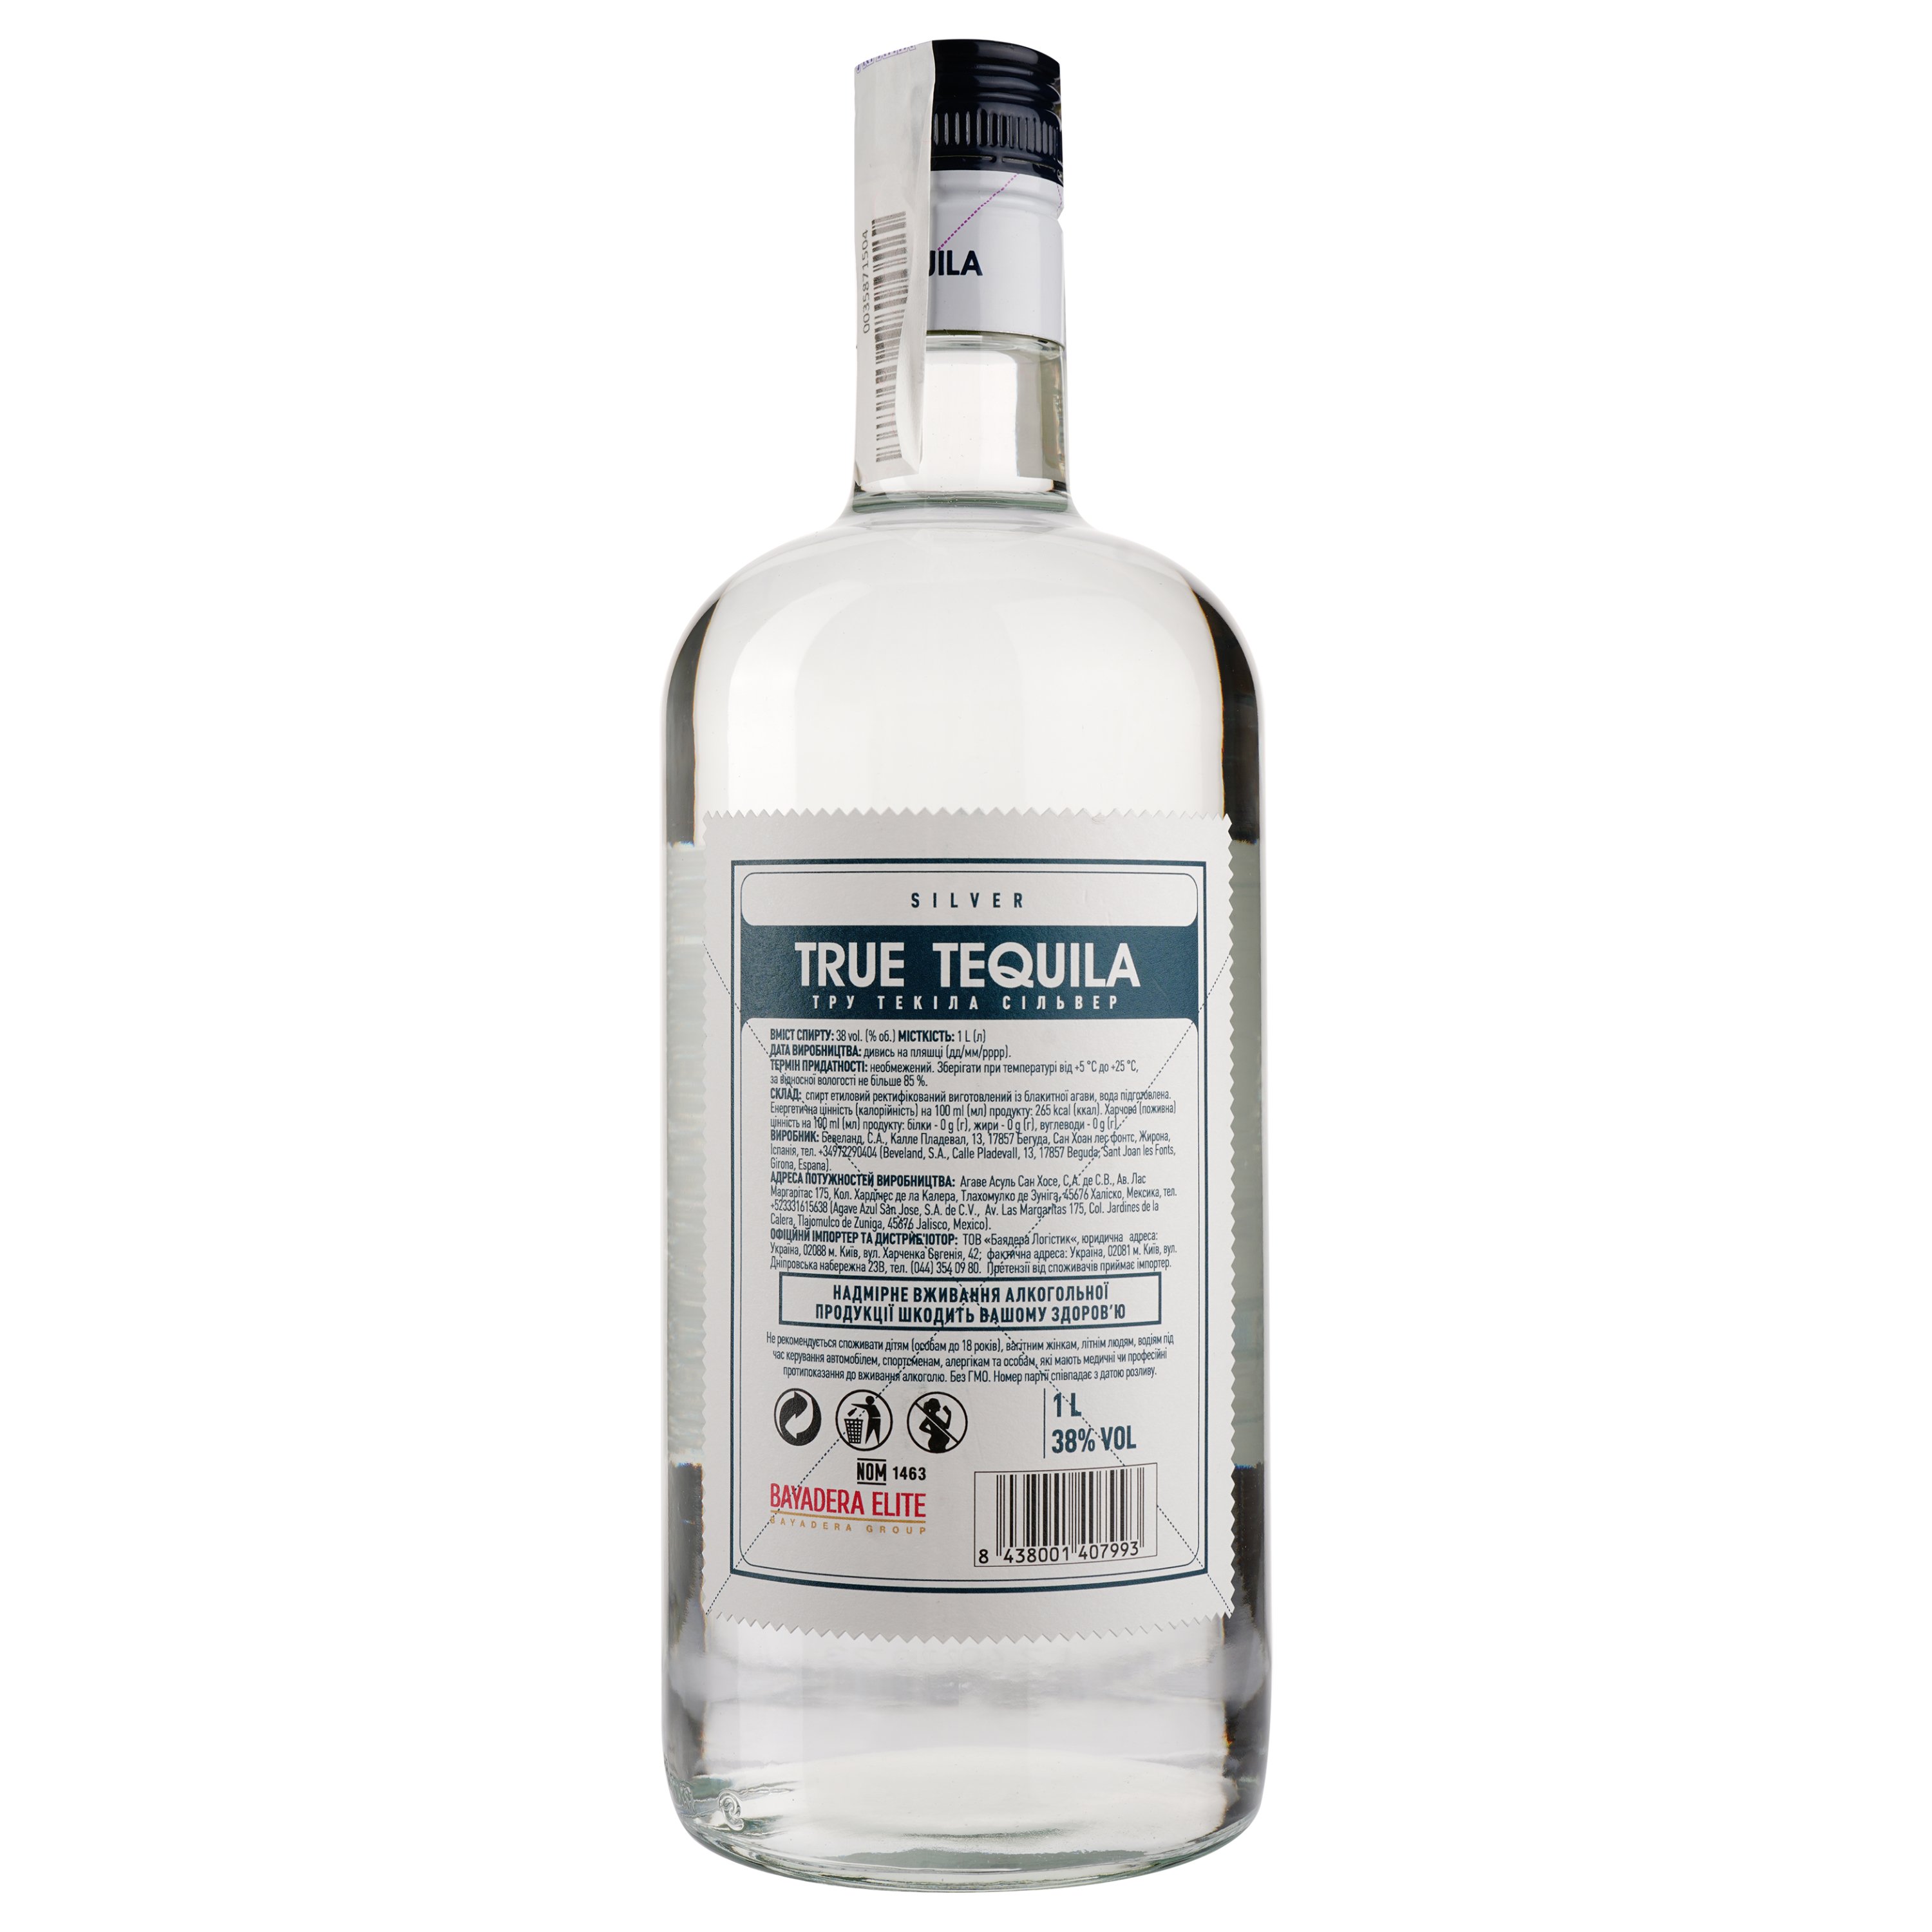 Текіла True Tequila Silver new, 38%, 1 л - фото 2